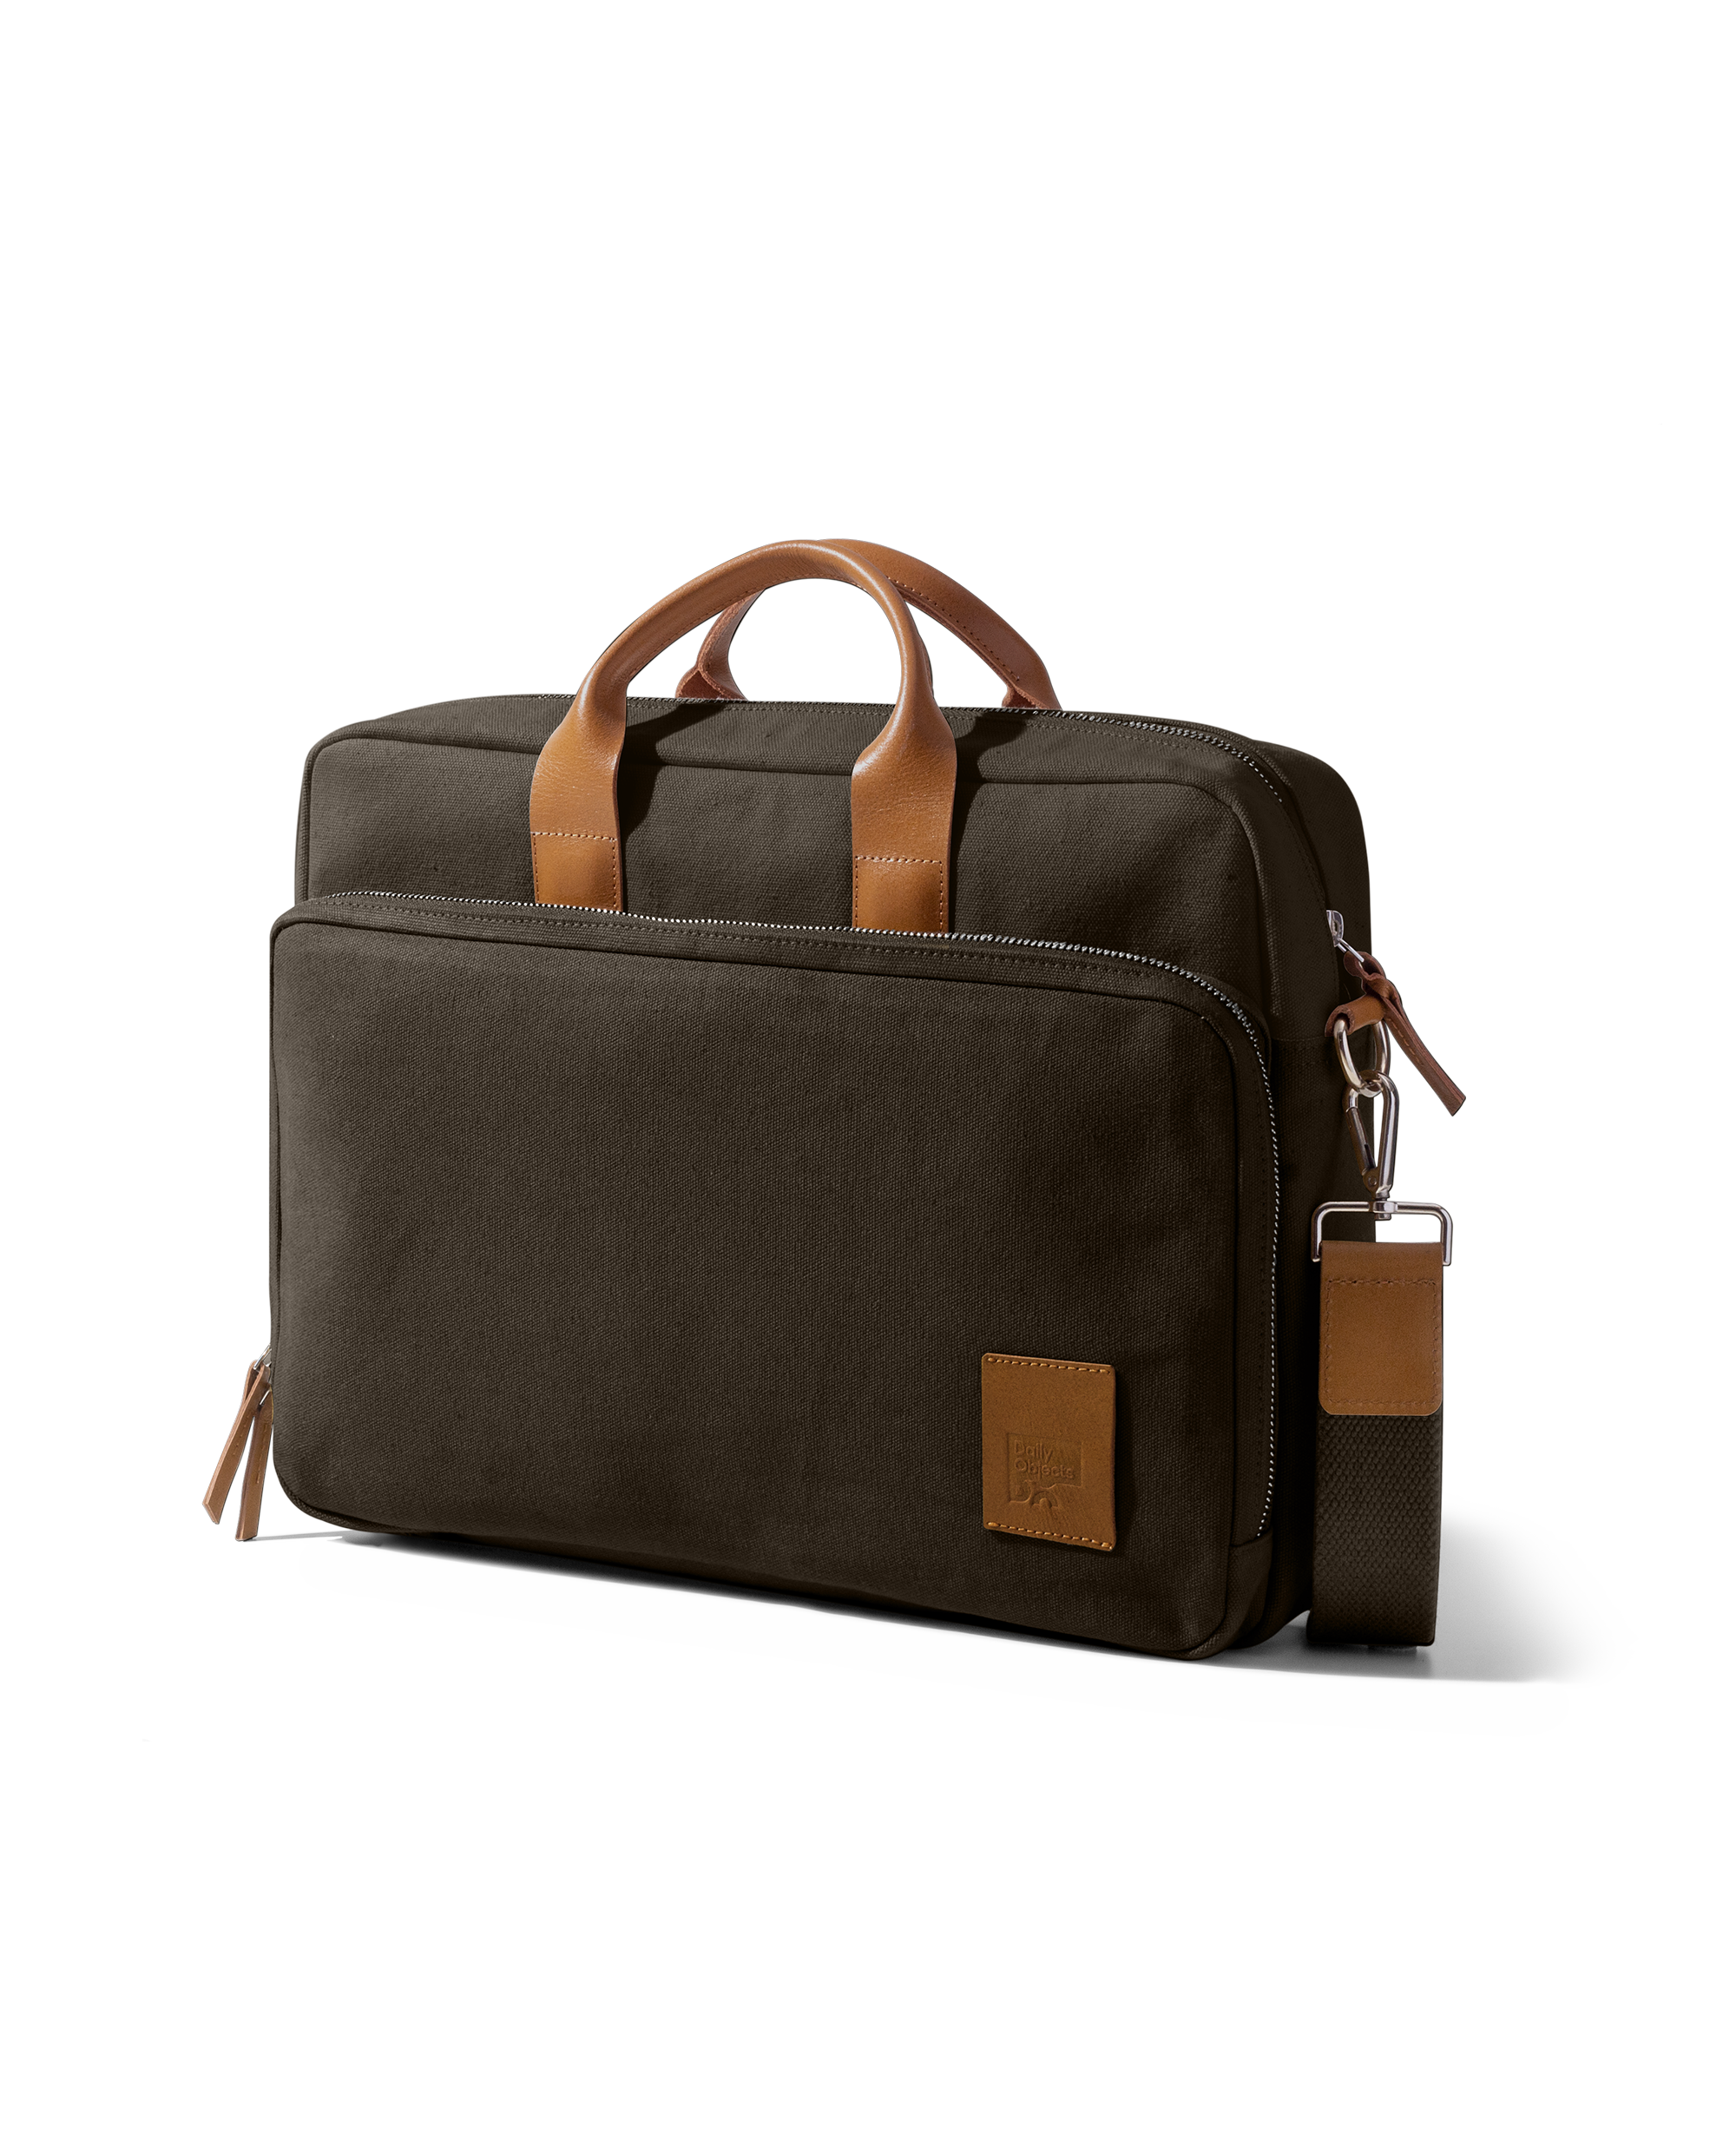 Canvas Briefcase | Work Bag | Laptop Bag – Ashley Clarke England